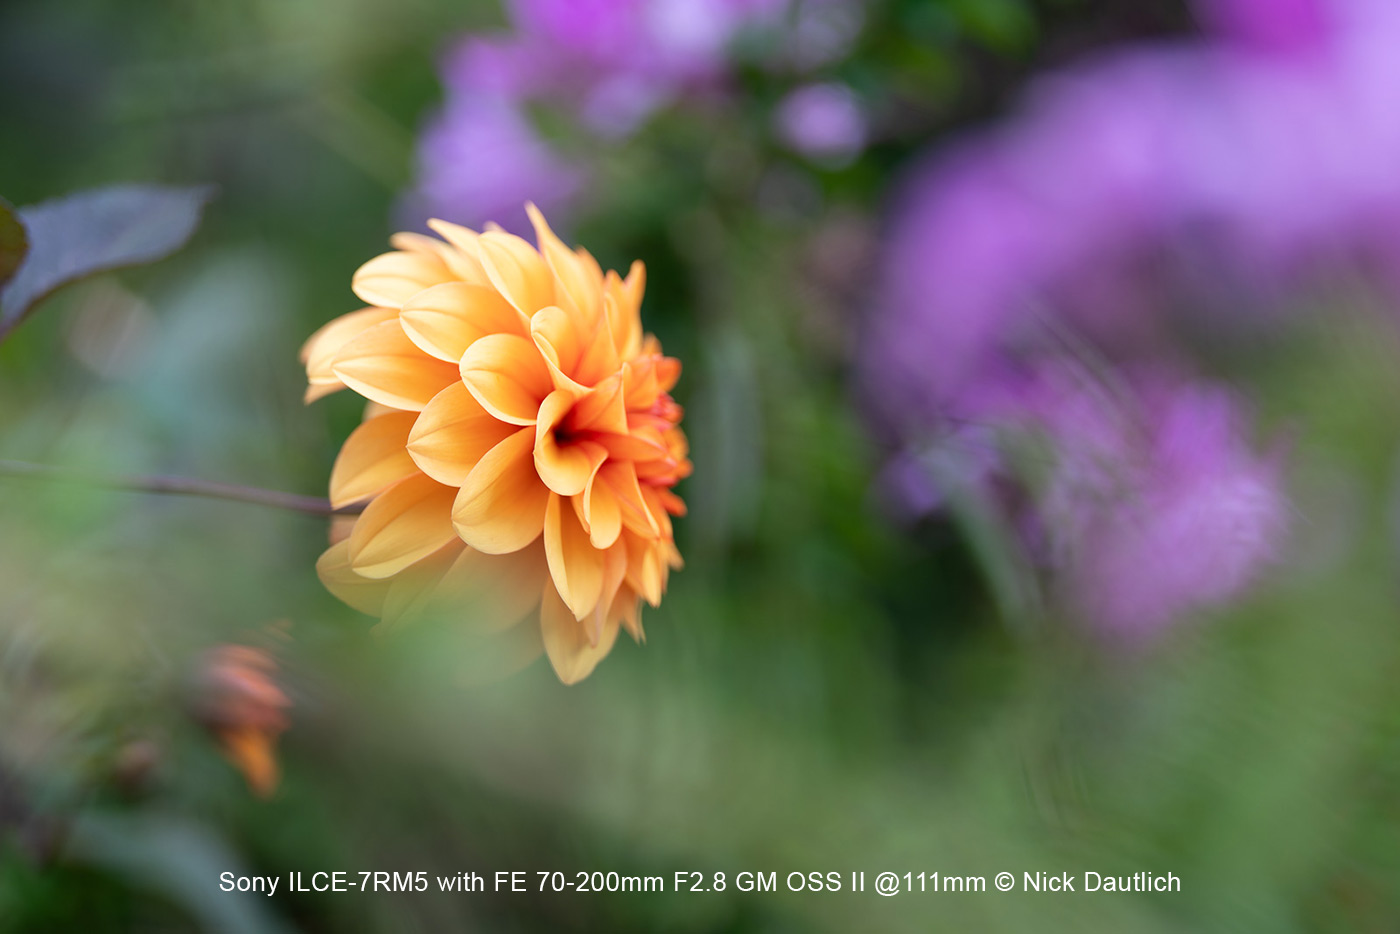 Flowery. Sony ILCE-7RM5 with FE 70-200mm F2.8 GM OSS II @111mm © Nick Dautlich